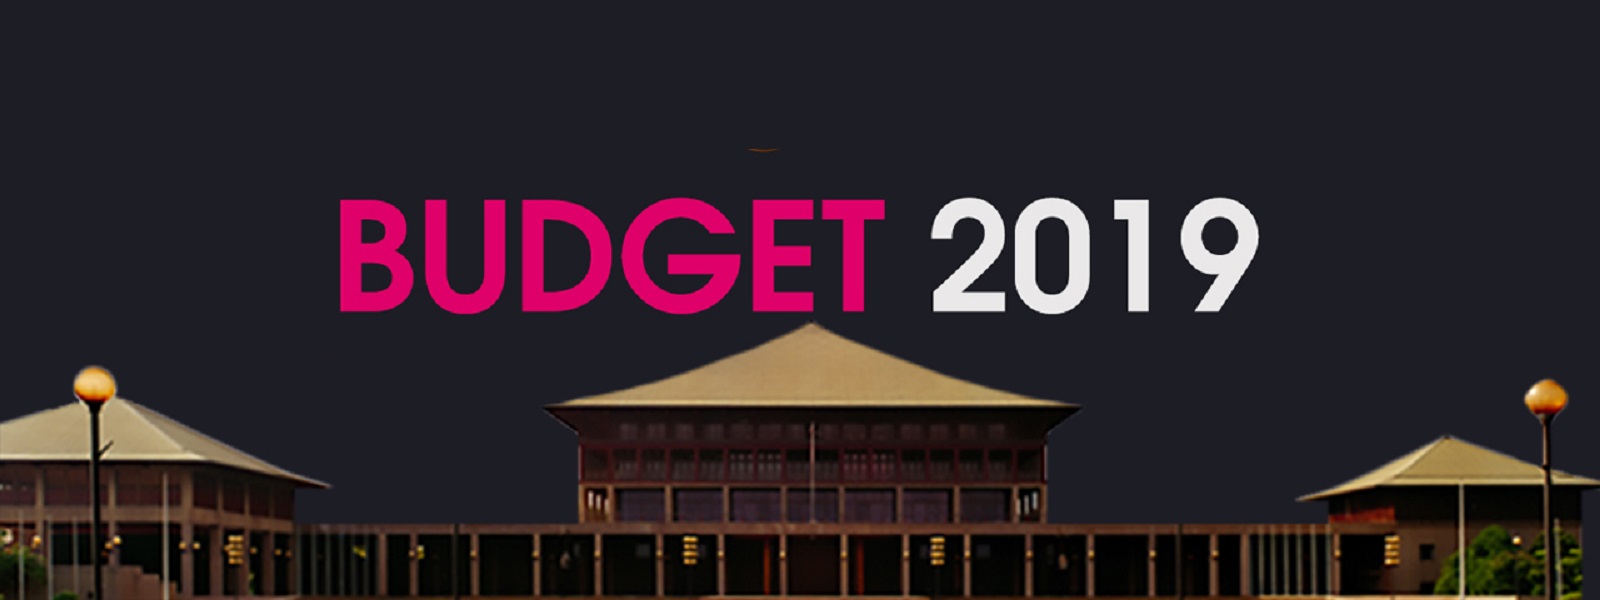 Missing & mismatching estimates in Budget'19: COPF